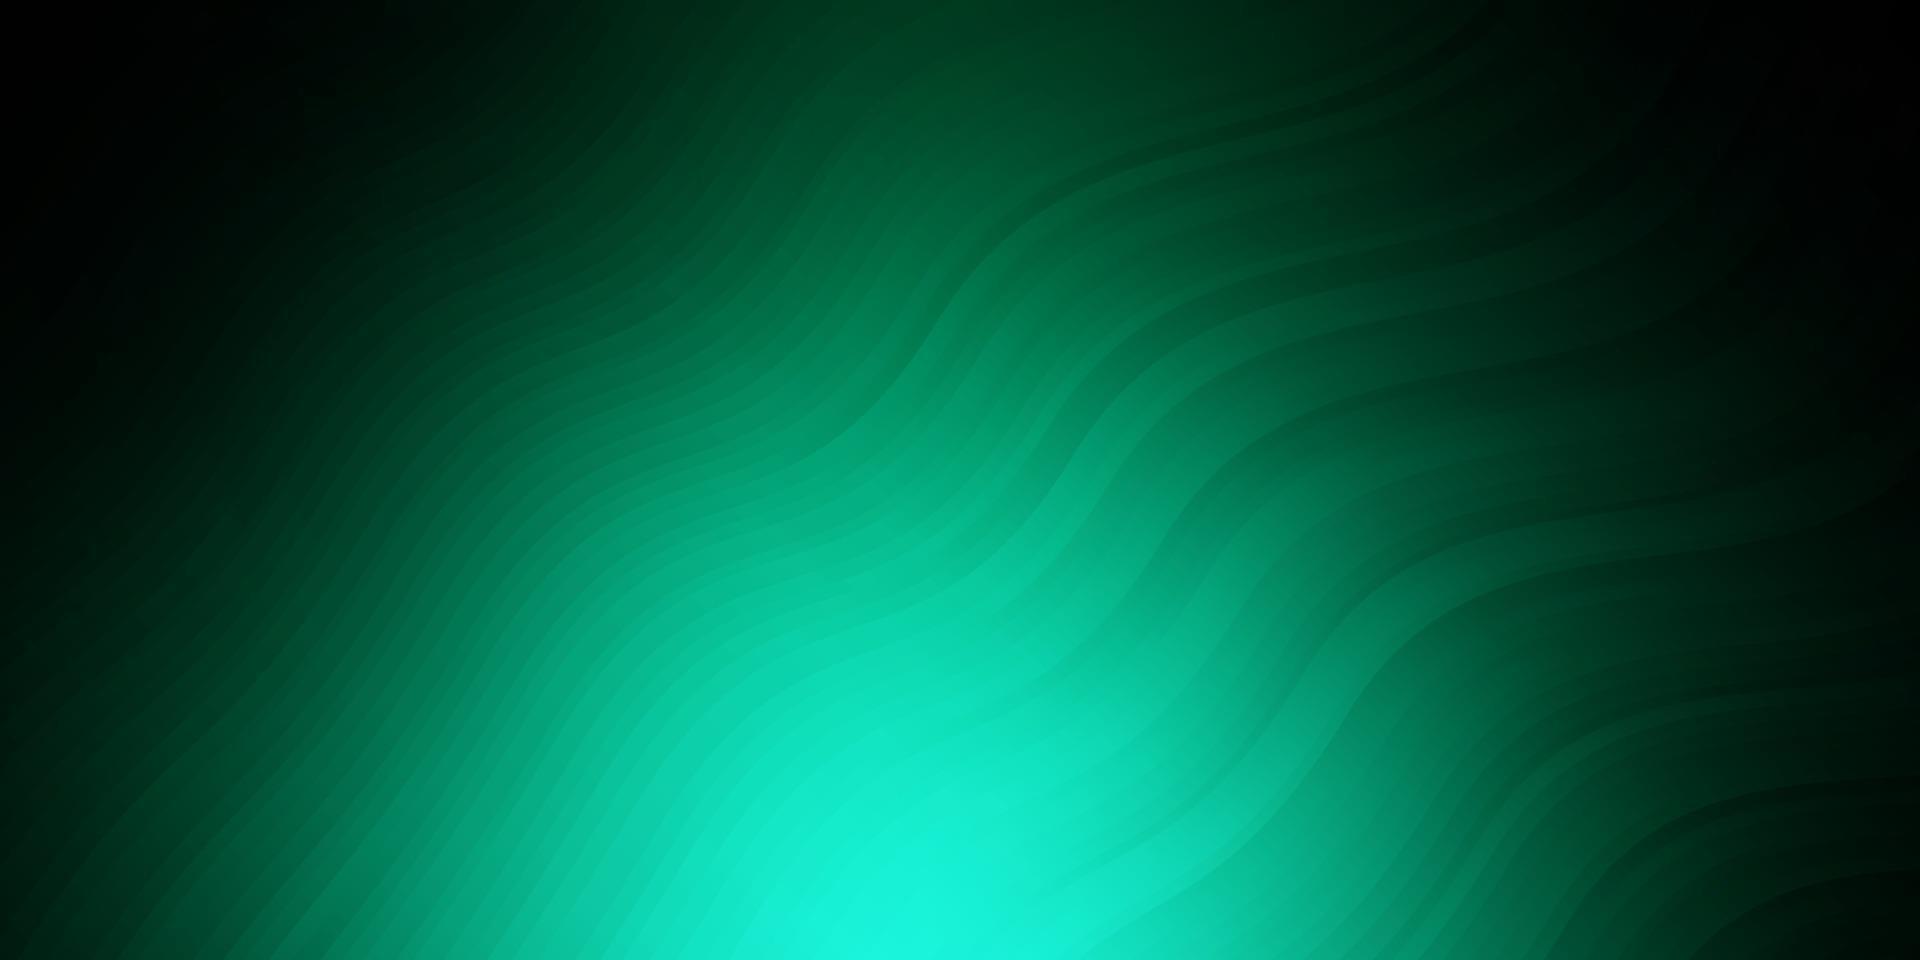 mörkgrönt vektormönster med kurvor. vektor